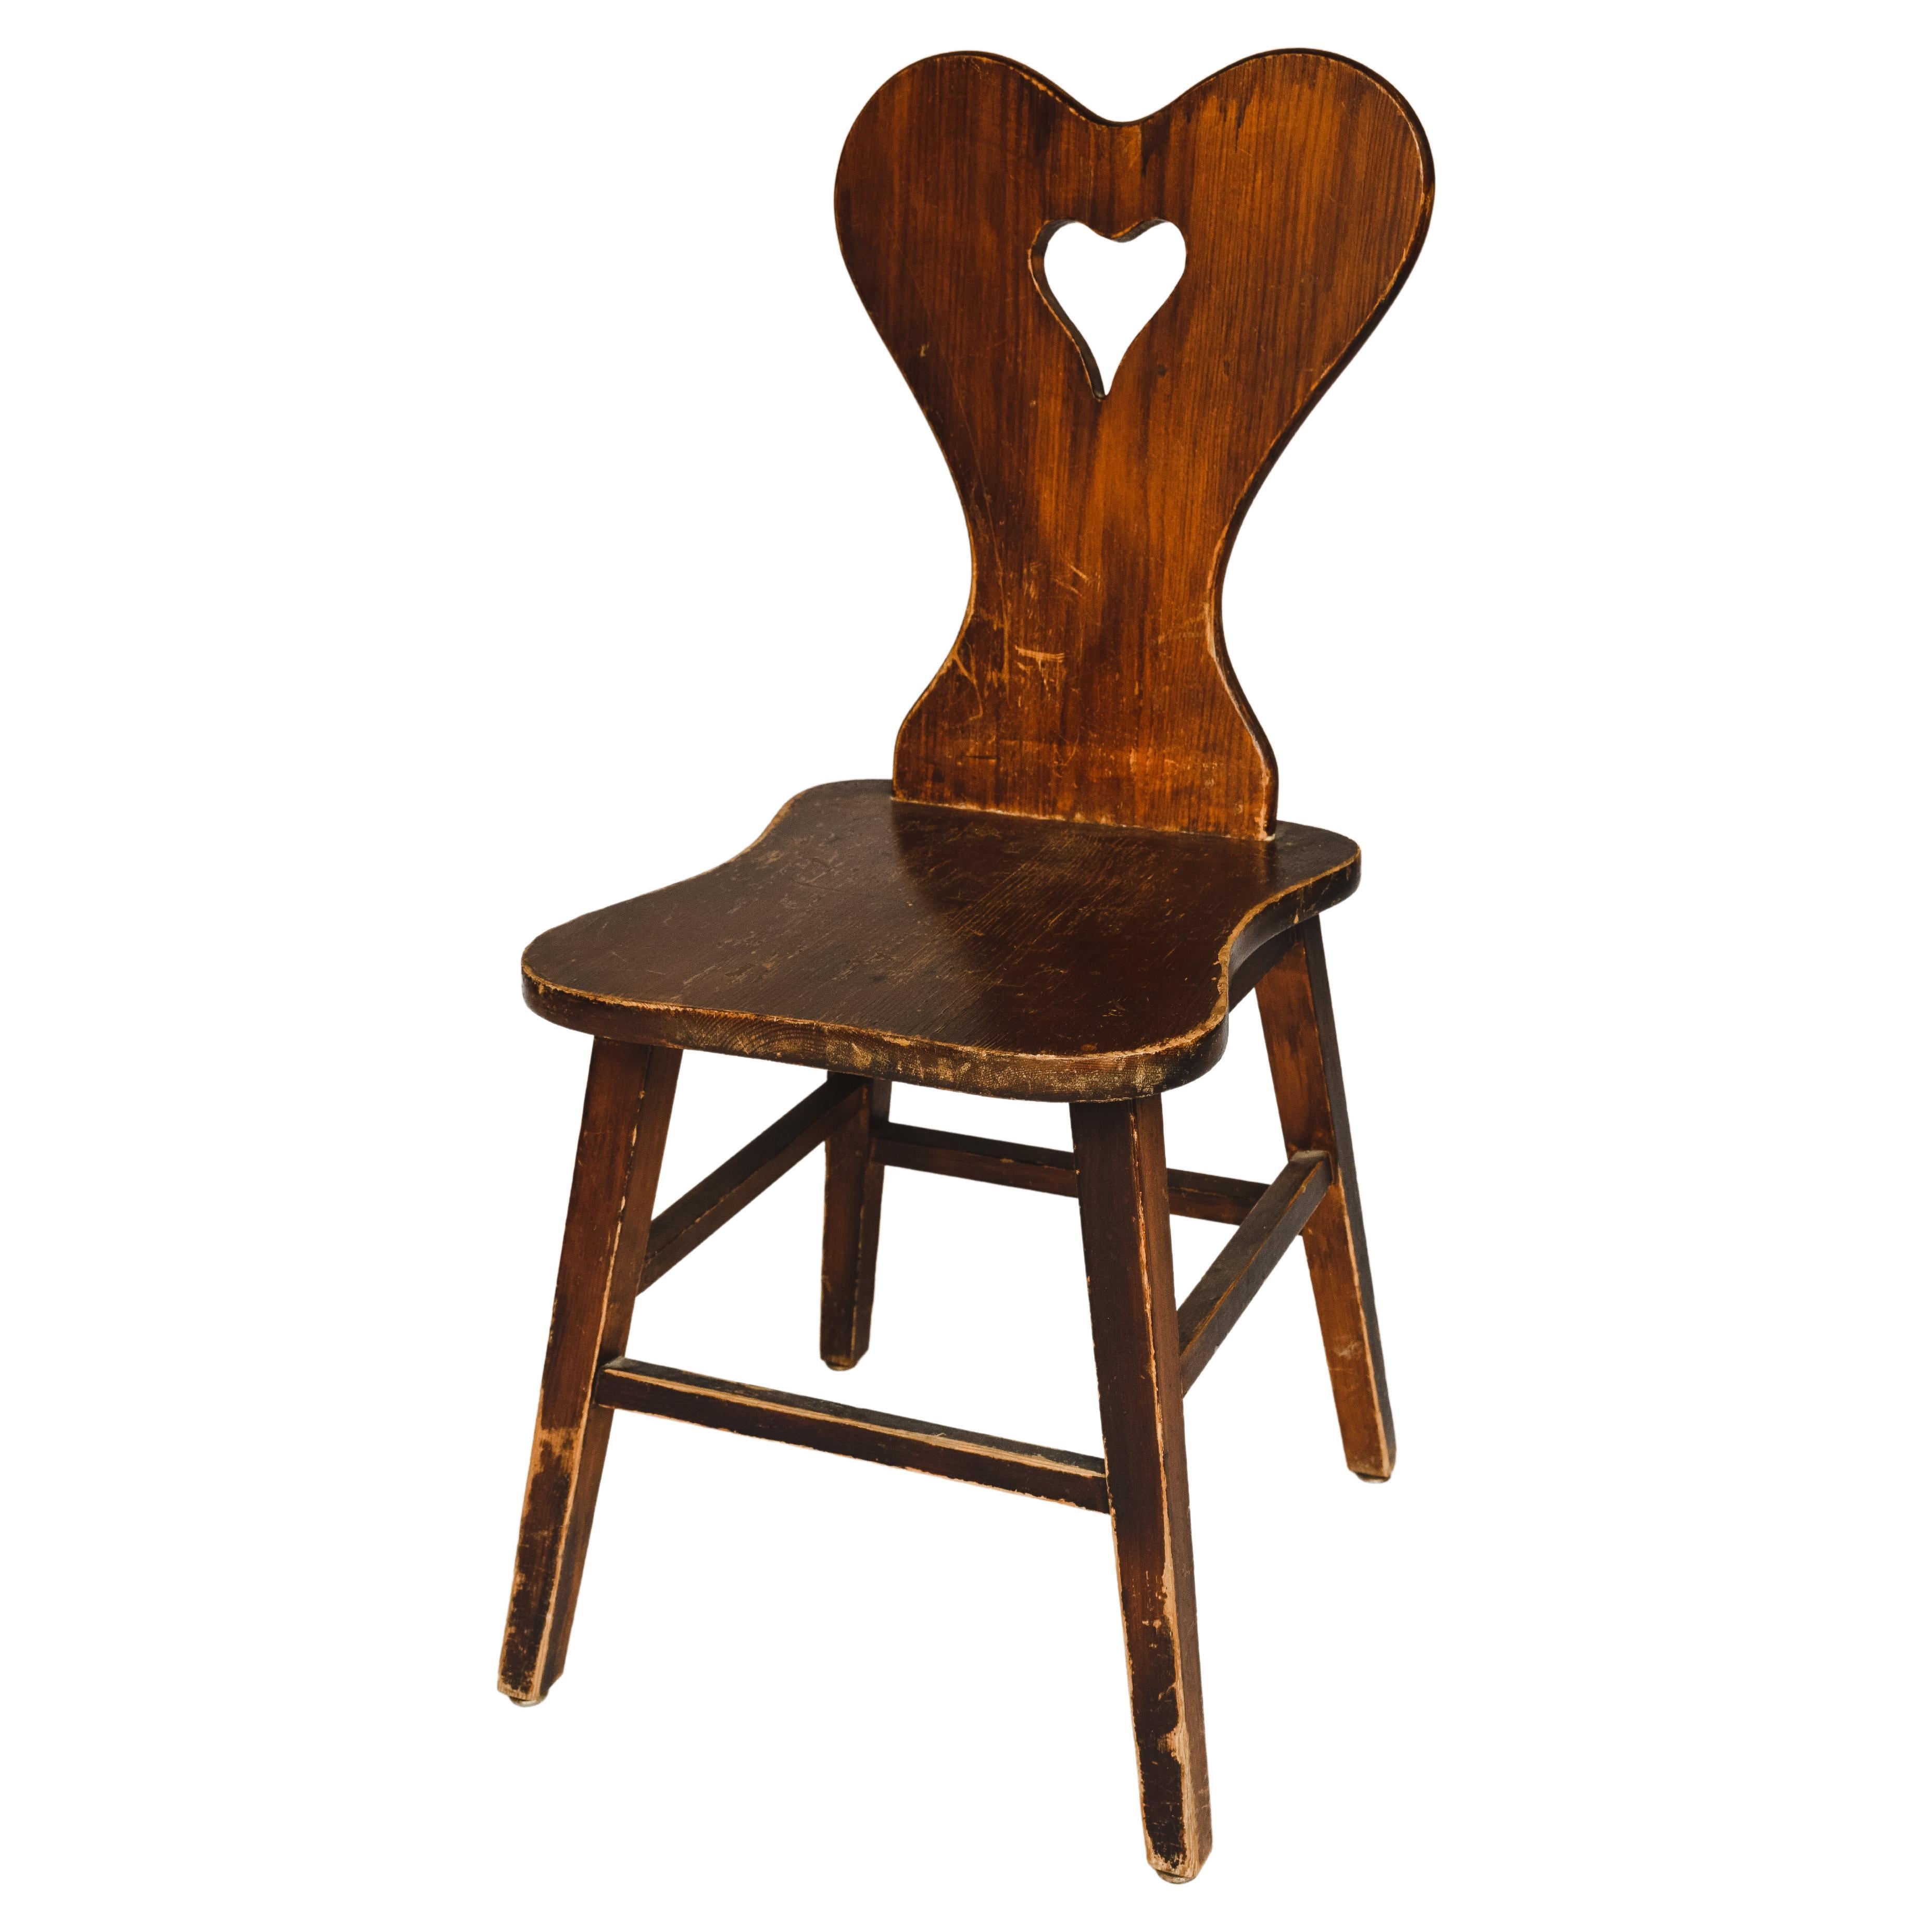 Wooden Heart Shaped Chair